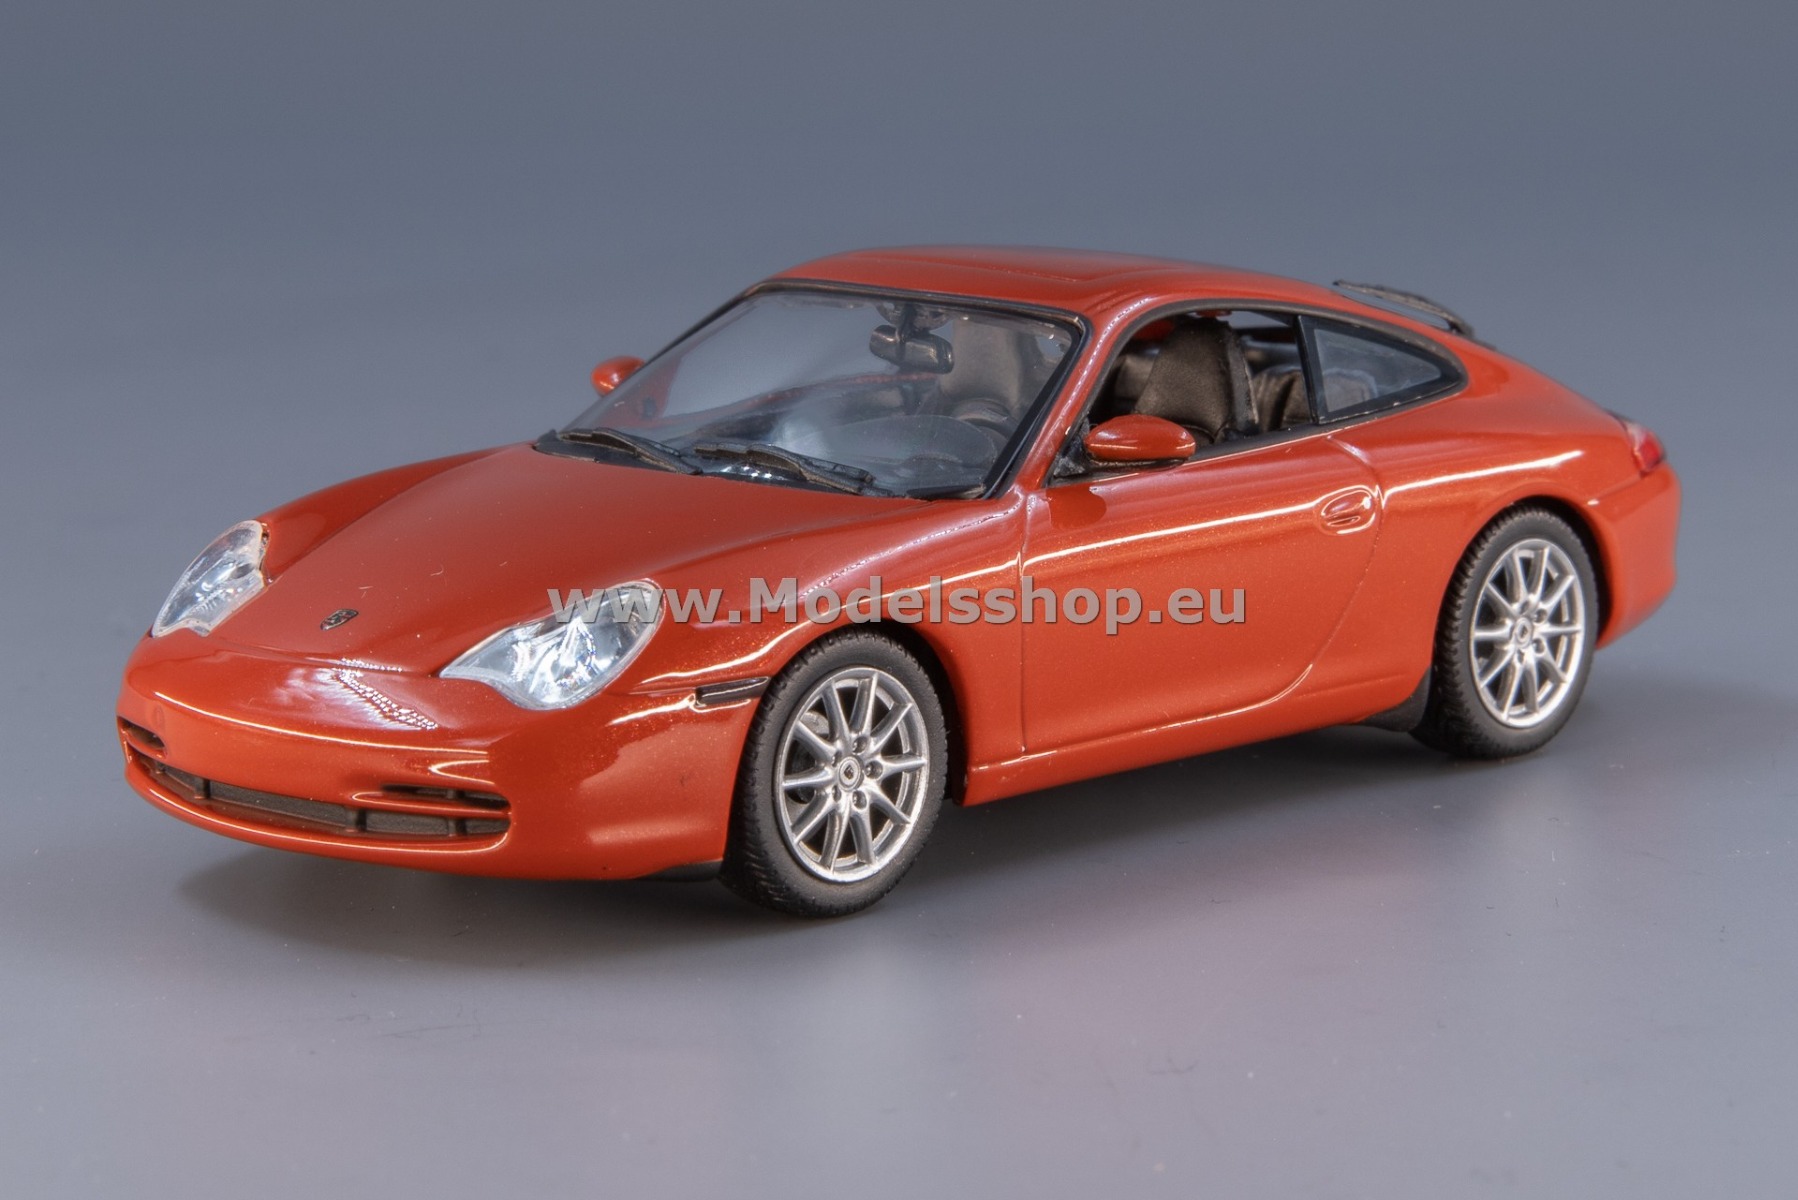 Maxichamps 940061021 Porsche 911 Carrera, 2001 /orange red metallic/